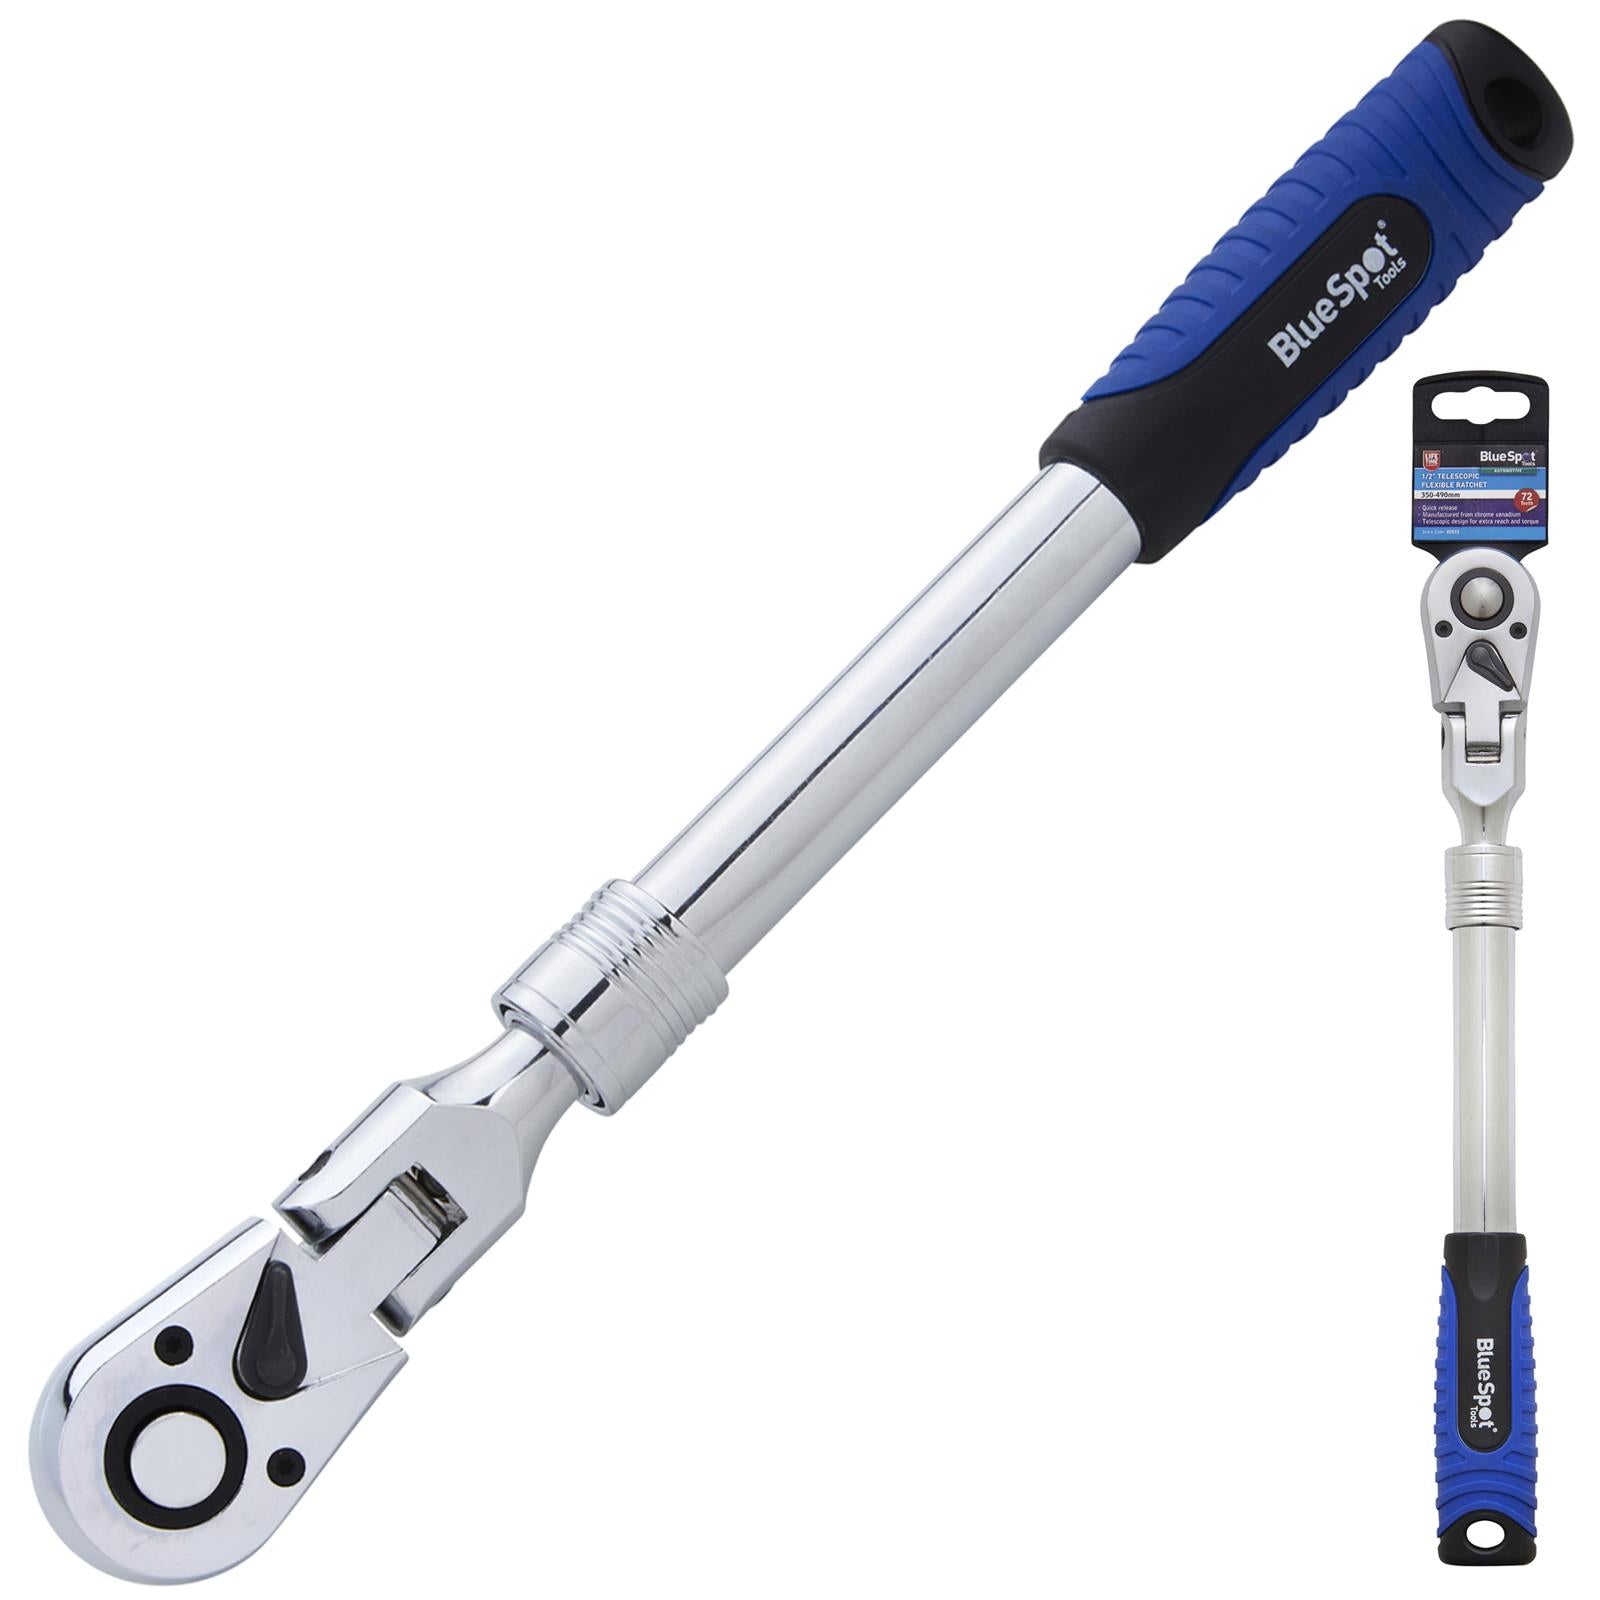 BlueSpot Ratchet Handle Socket Wrench Telescopic Flexi Head 1/2" Drive 350-490mm 72 Tooth